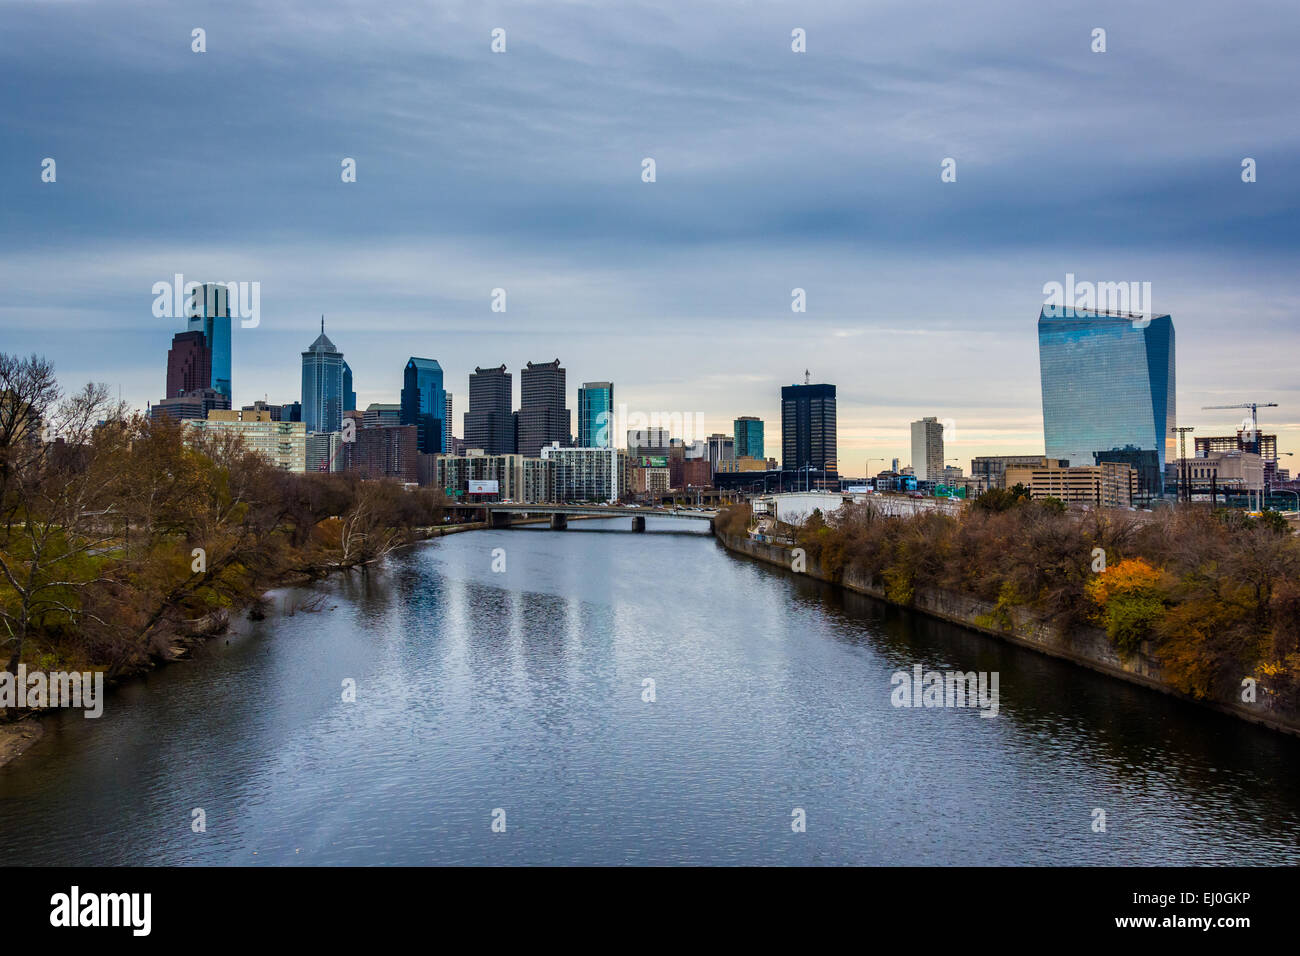 The Schuylkill River and skyline in Philadelphia, Pennsylvania. Stock Photo